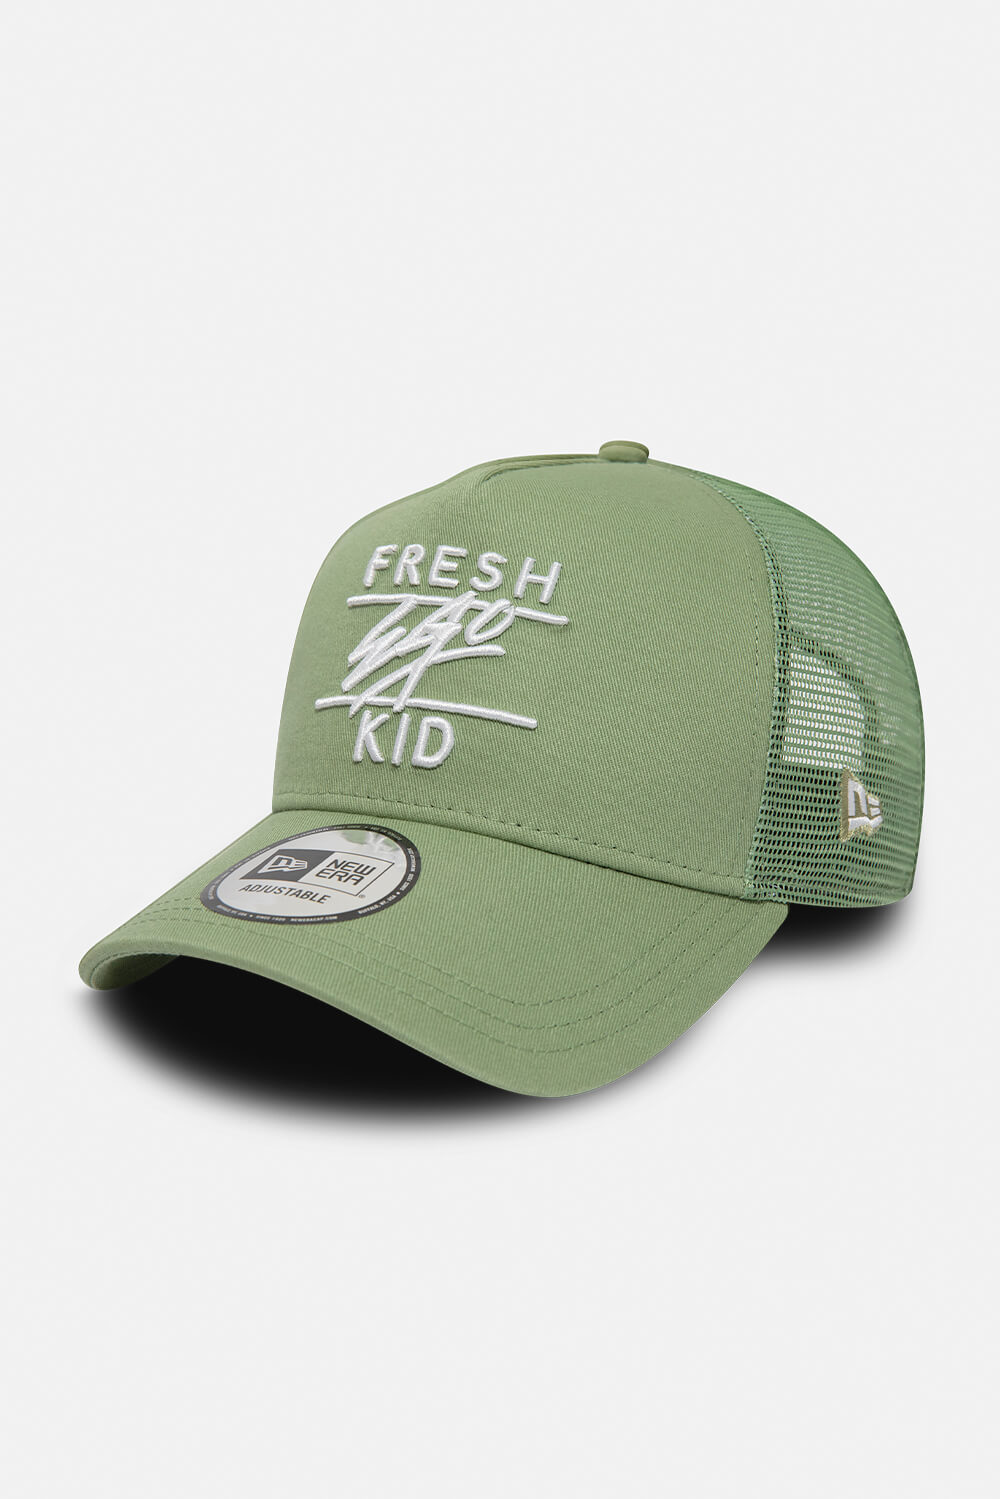 Fresh Ego Kid New Era pastel green trucker